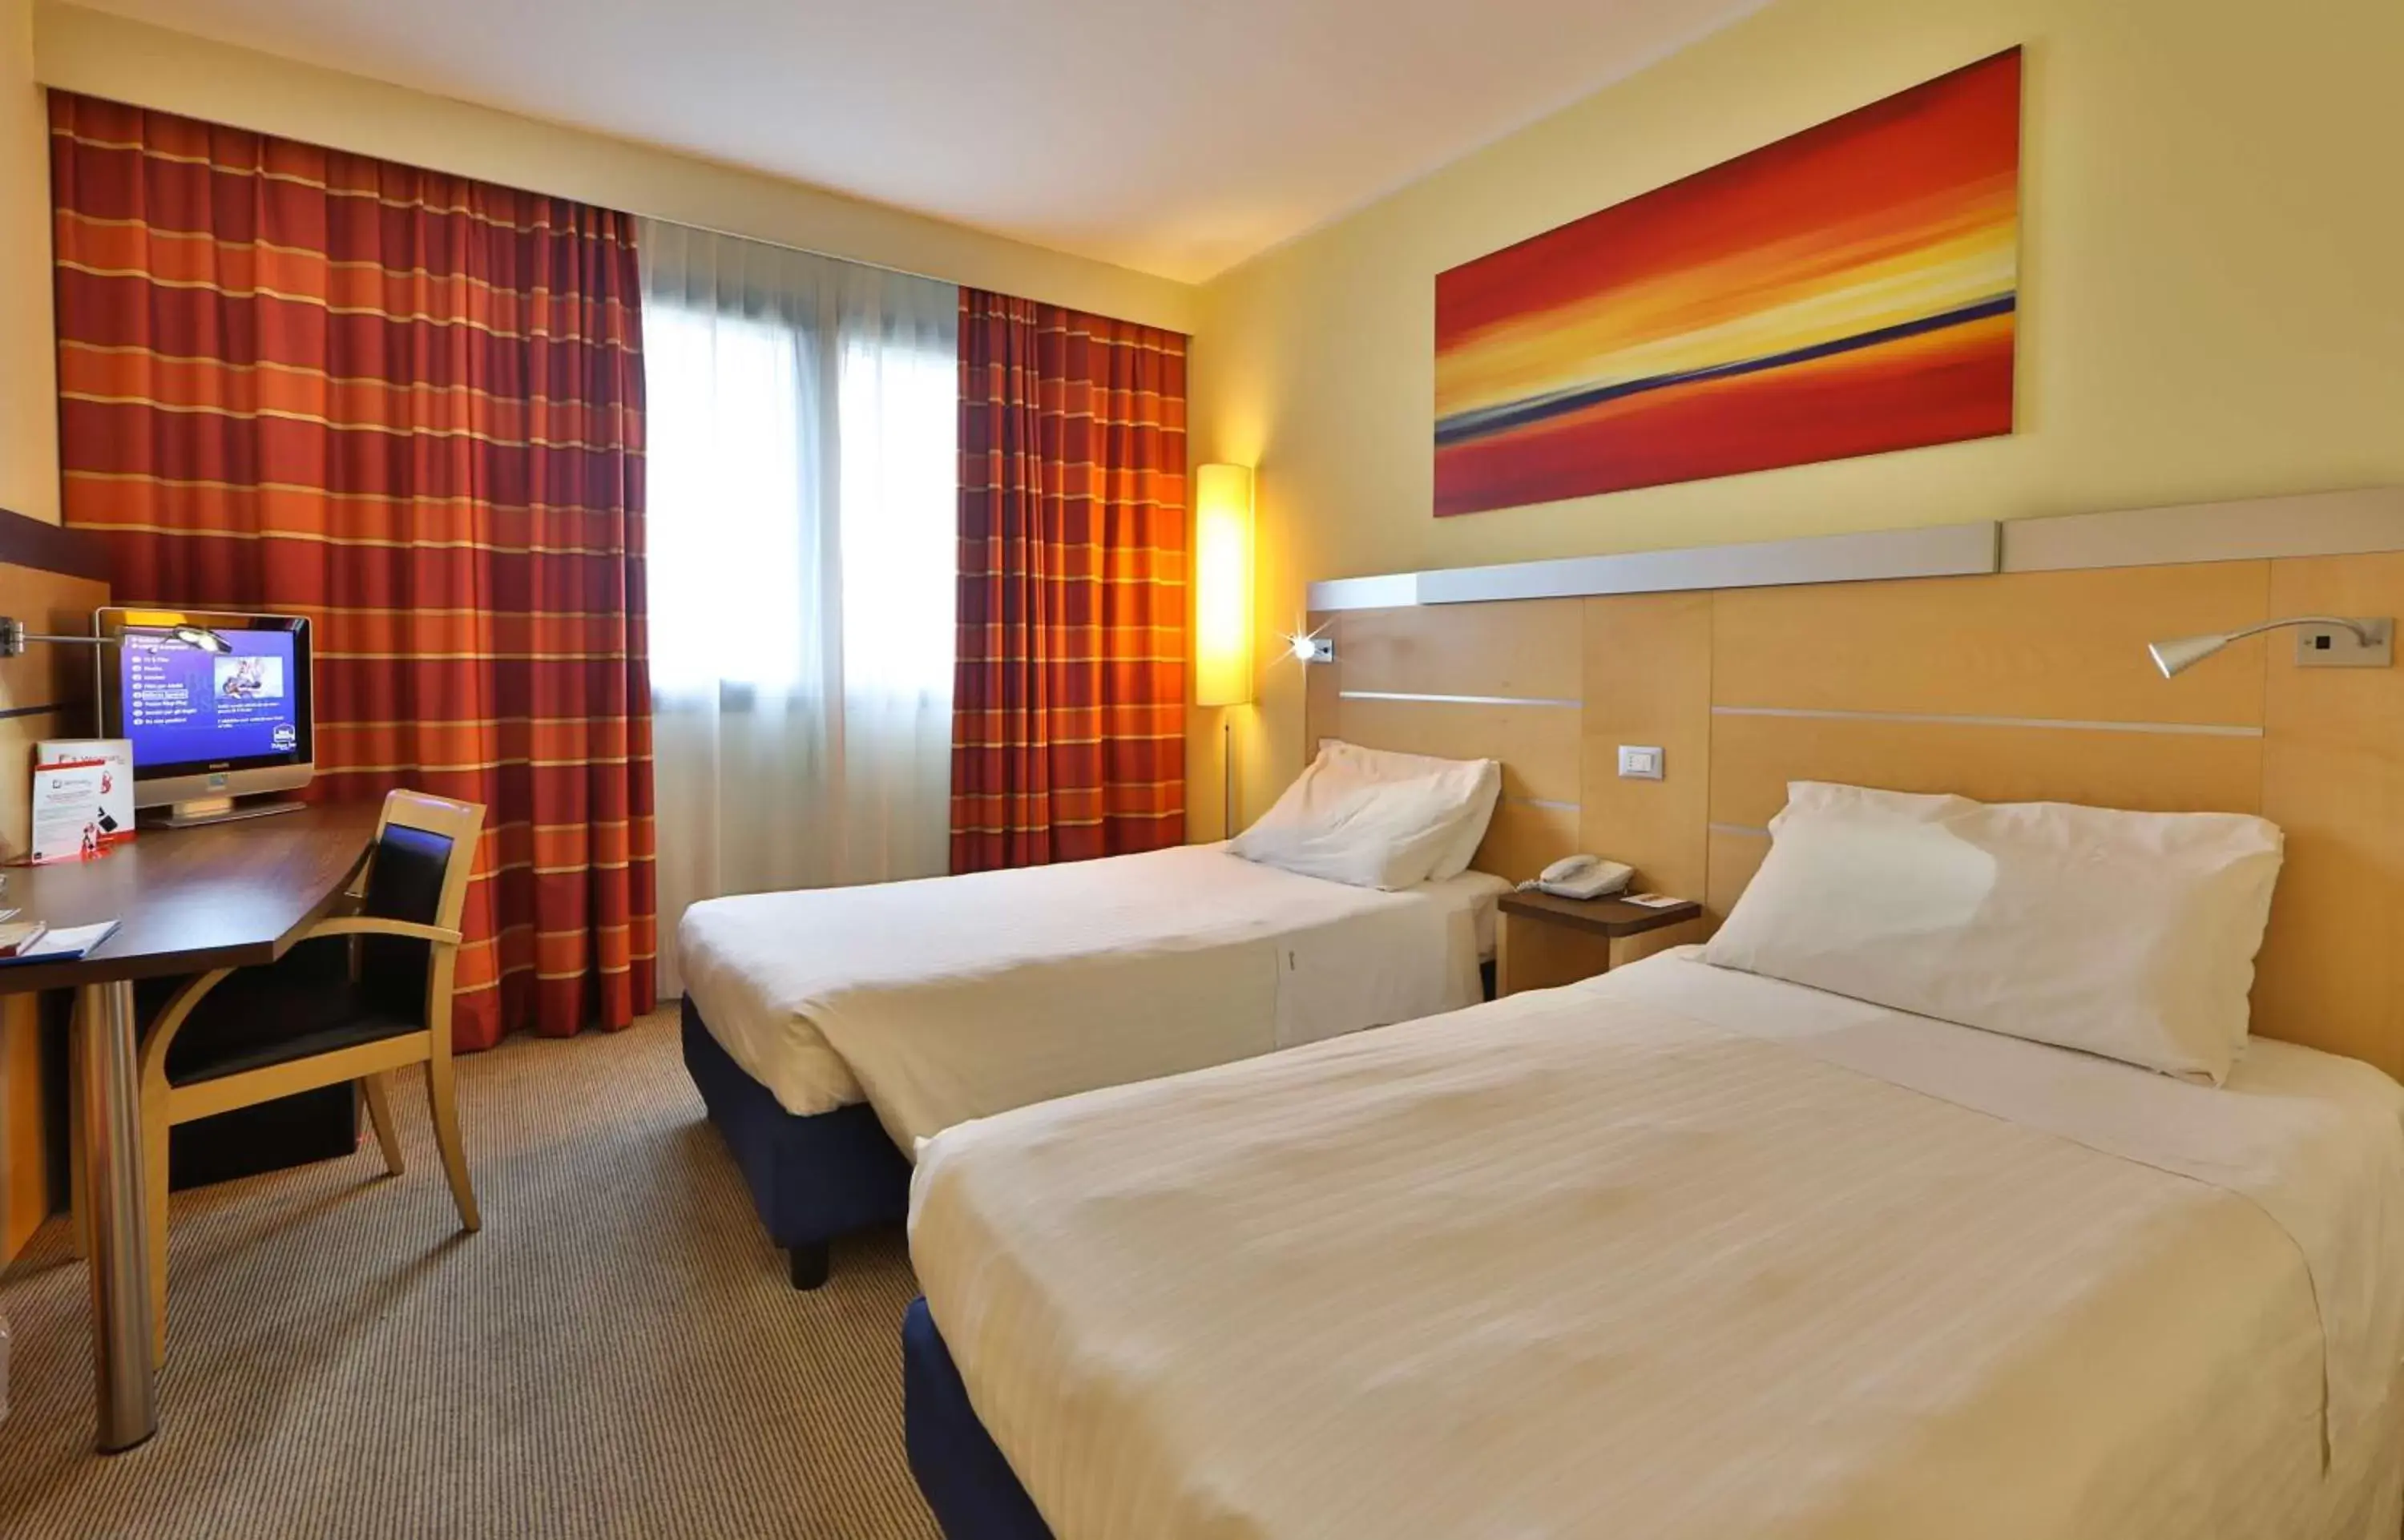 Bedroom, Bed in Best Western Palace Inn Hotel